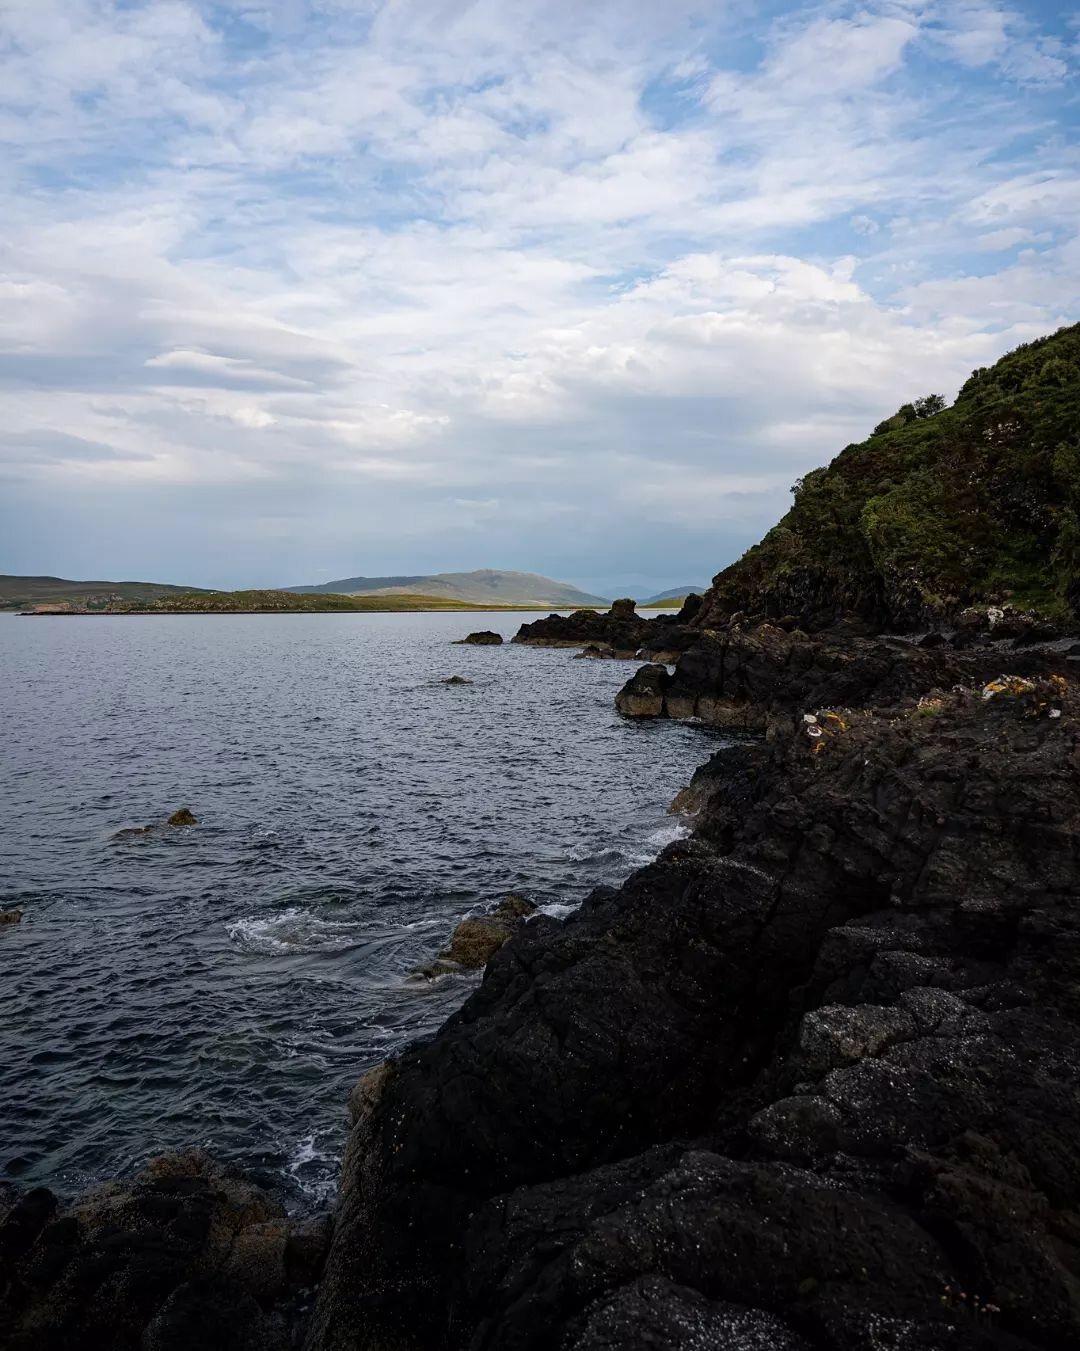 Shoreline scenes
.
. 
.
.
.
.
.
#isleofskye #landscapephotography #landscape #scotland #scottish #igscotland #scottishhighlands #thisisscotland #shore #coastline #crab #naturephotography #wildplaces #naturelovers #outdoortones #folkscenery #in2nature